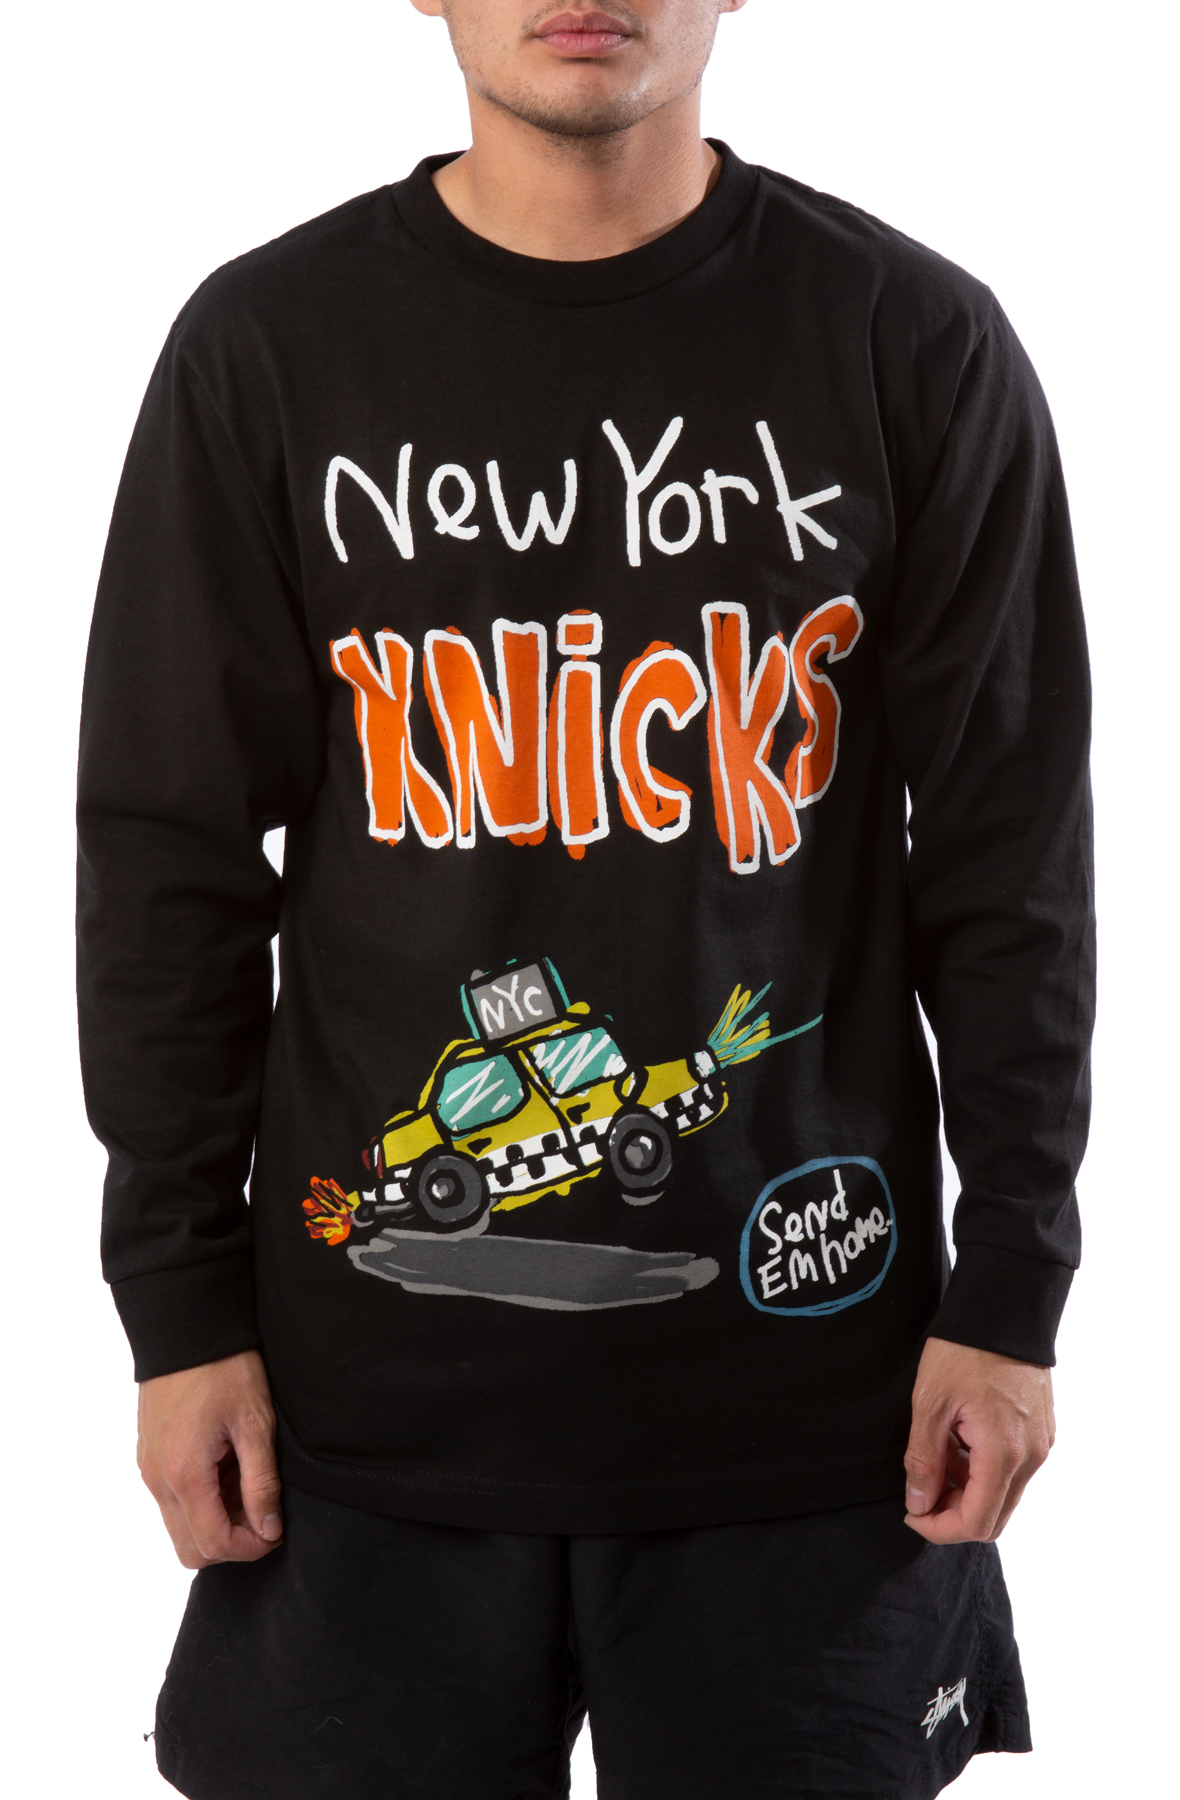 New York Knicks Sportiqe 2020/21 City Edition Comfy Long Sleeve